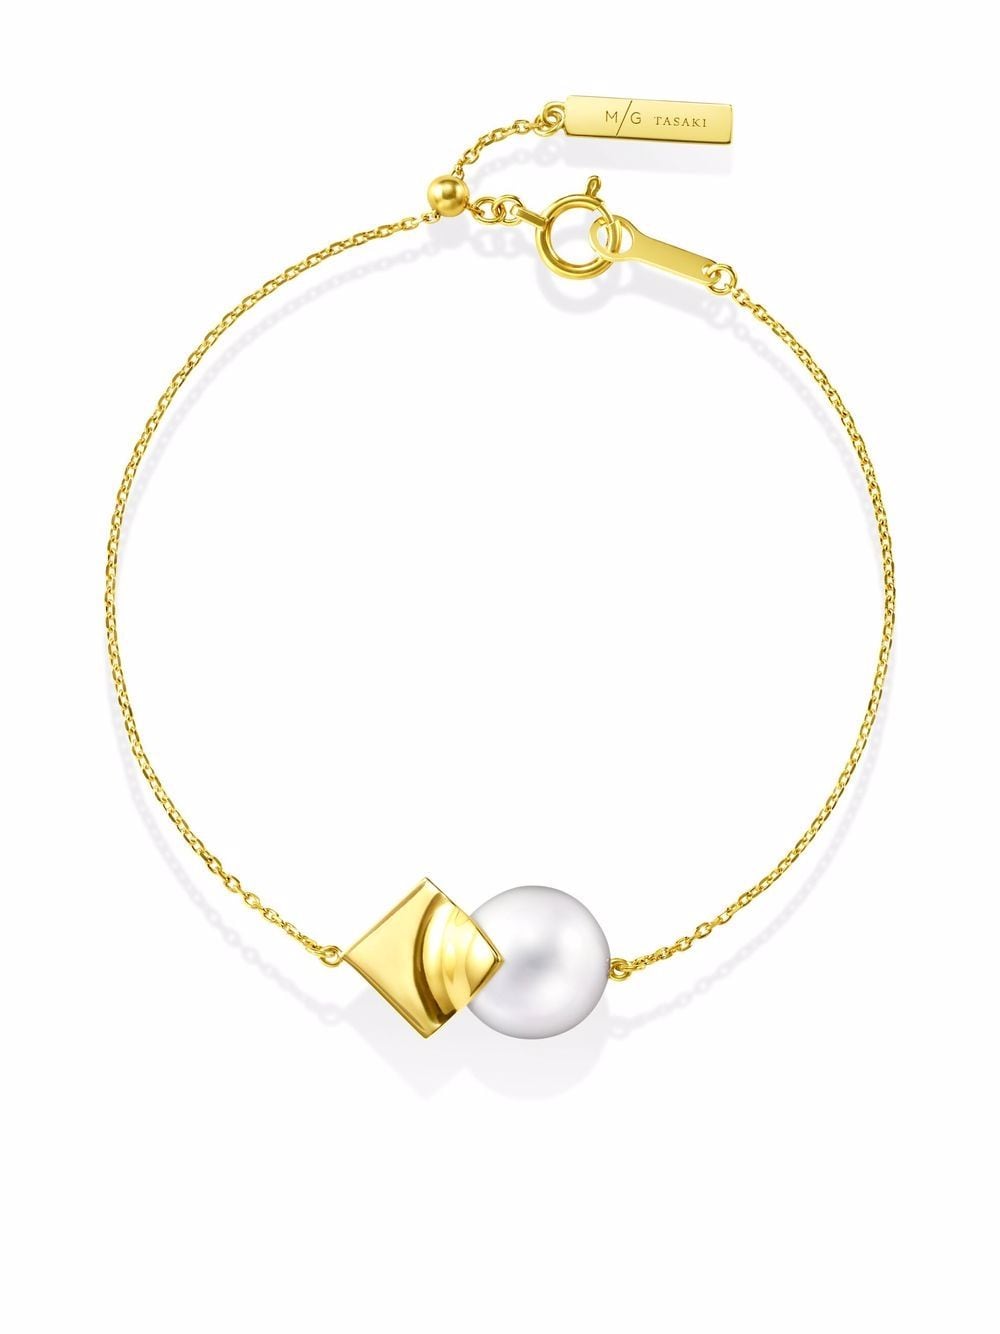 TASAKI 18kt yellow gold M/G TASAKI SQUARE LEAF pearl bracelet von TASAKI